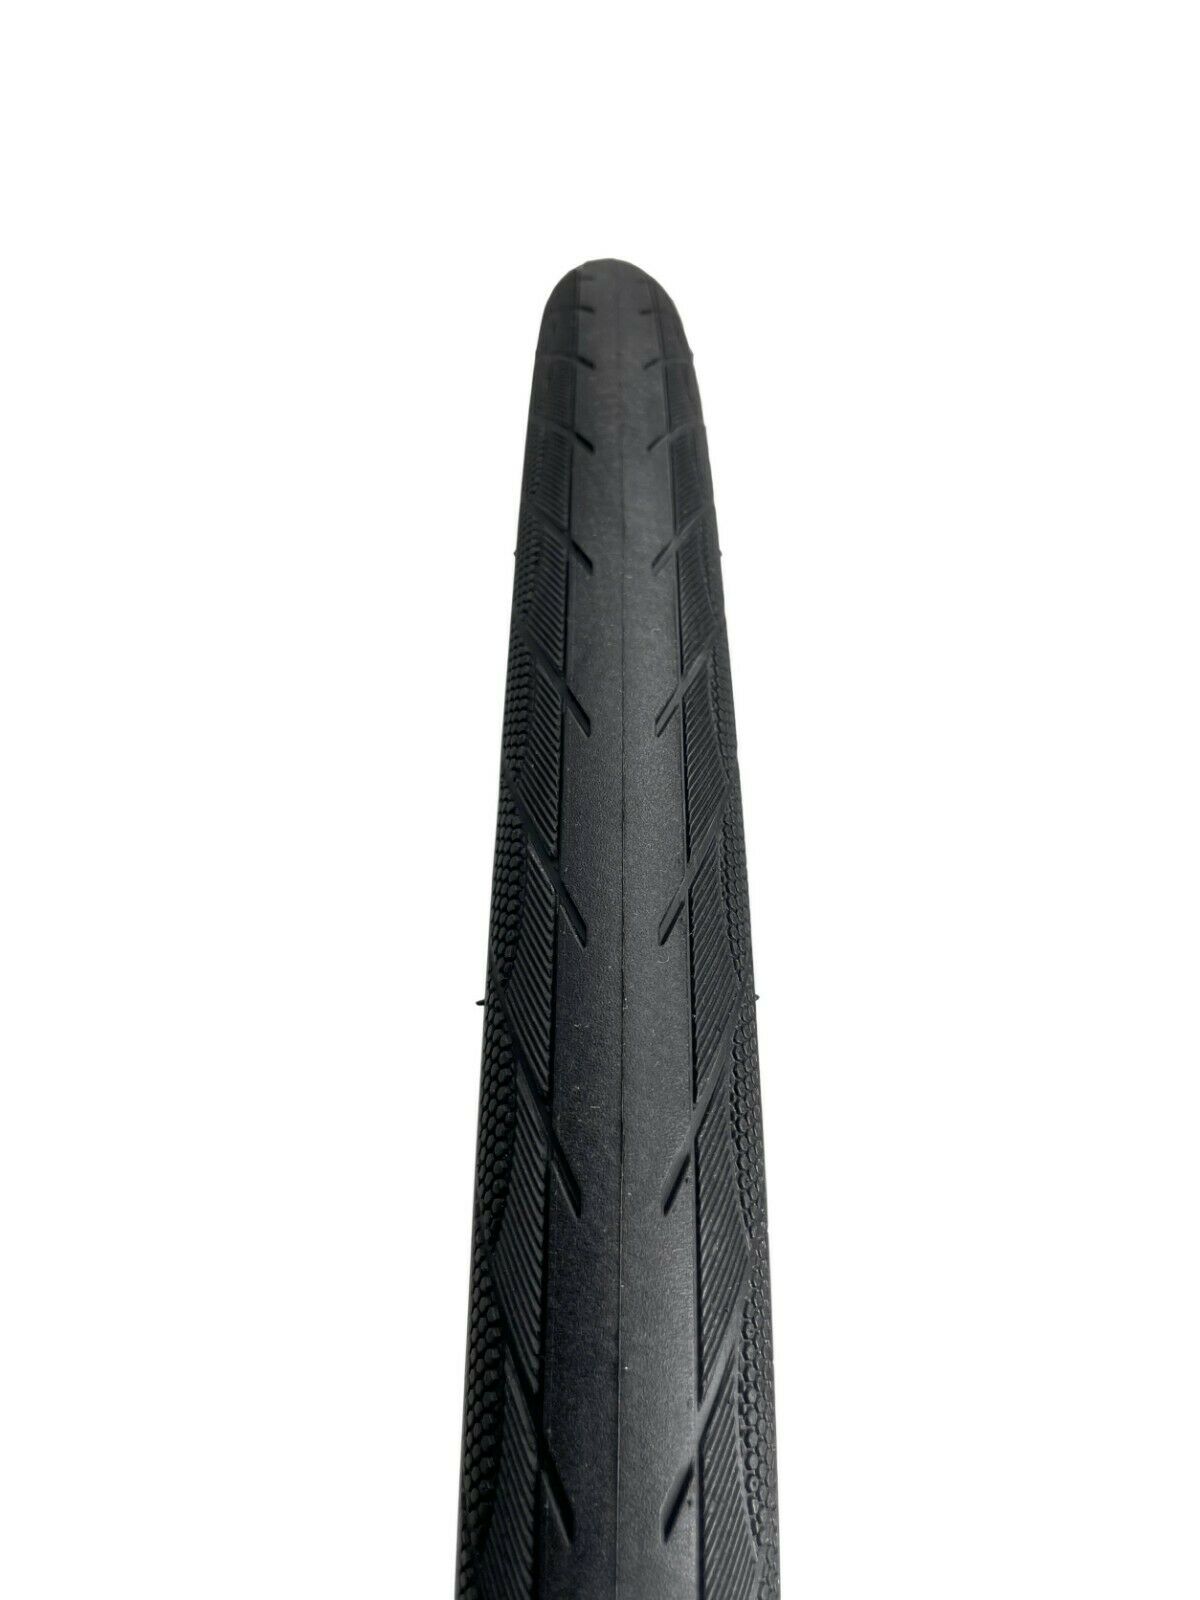 Giant S-X3 700 x 38c Puncture Resistant Hybrid Tyres - Sportandleisure.com (6968042422426)